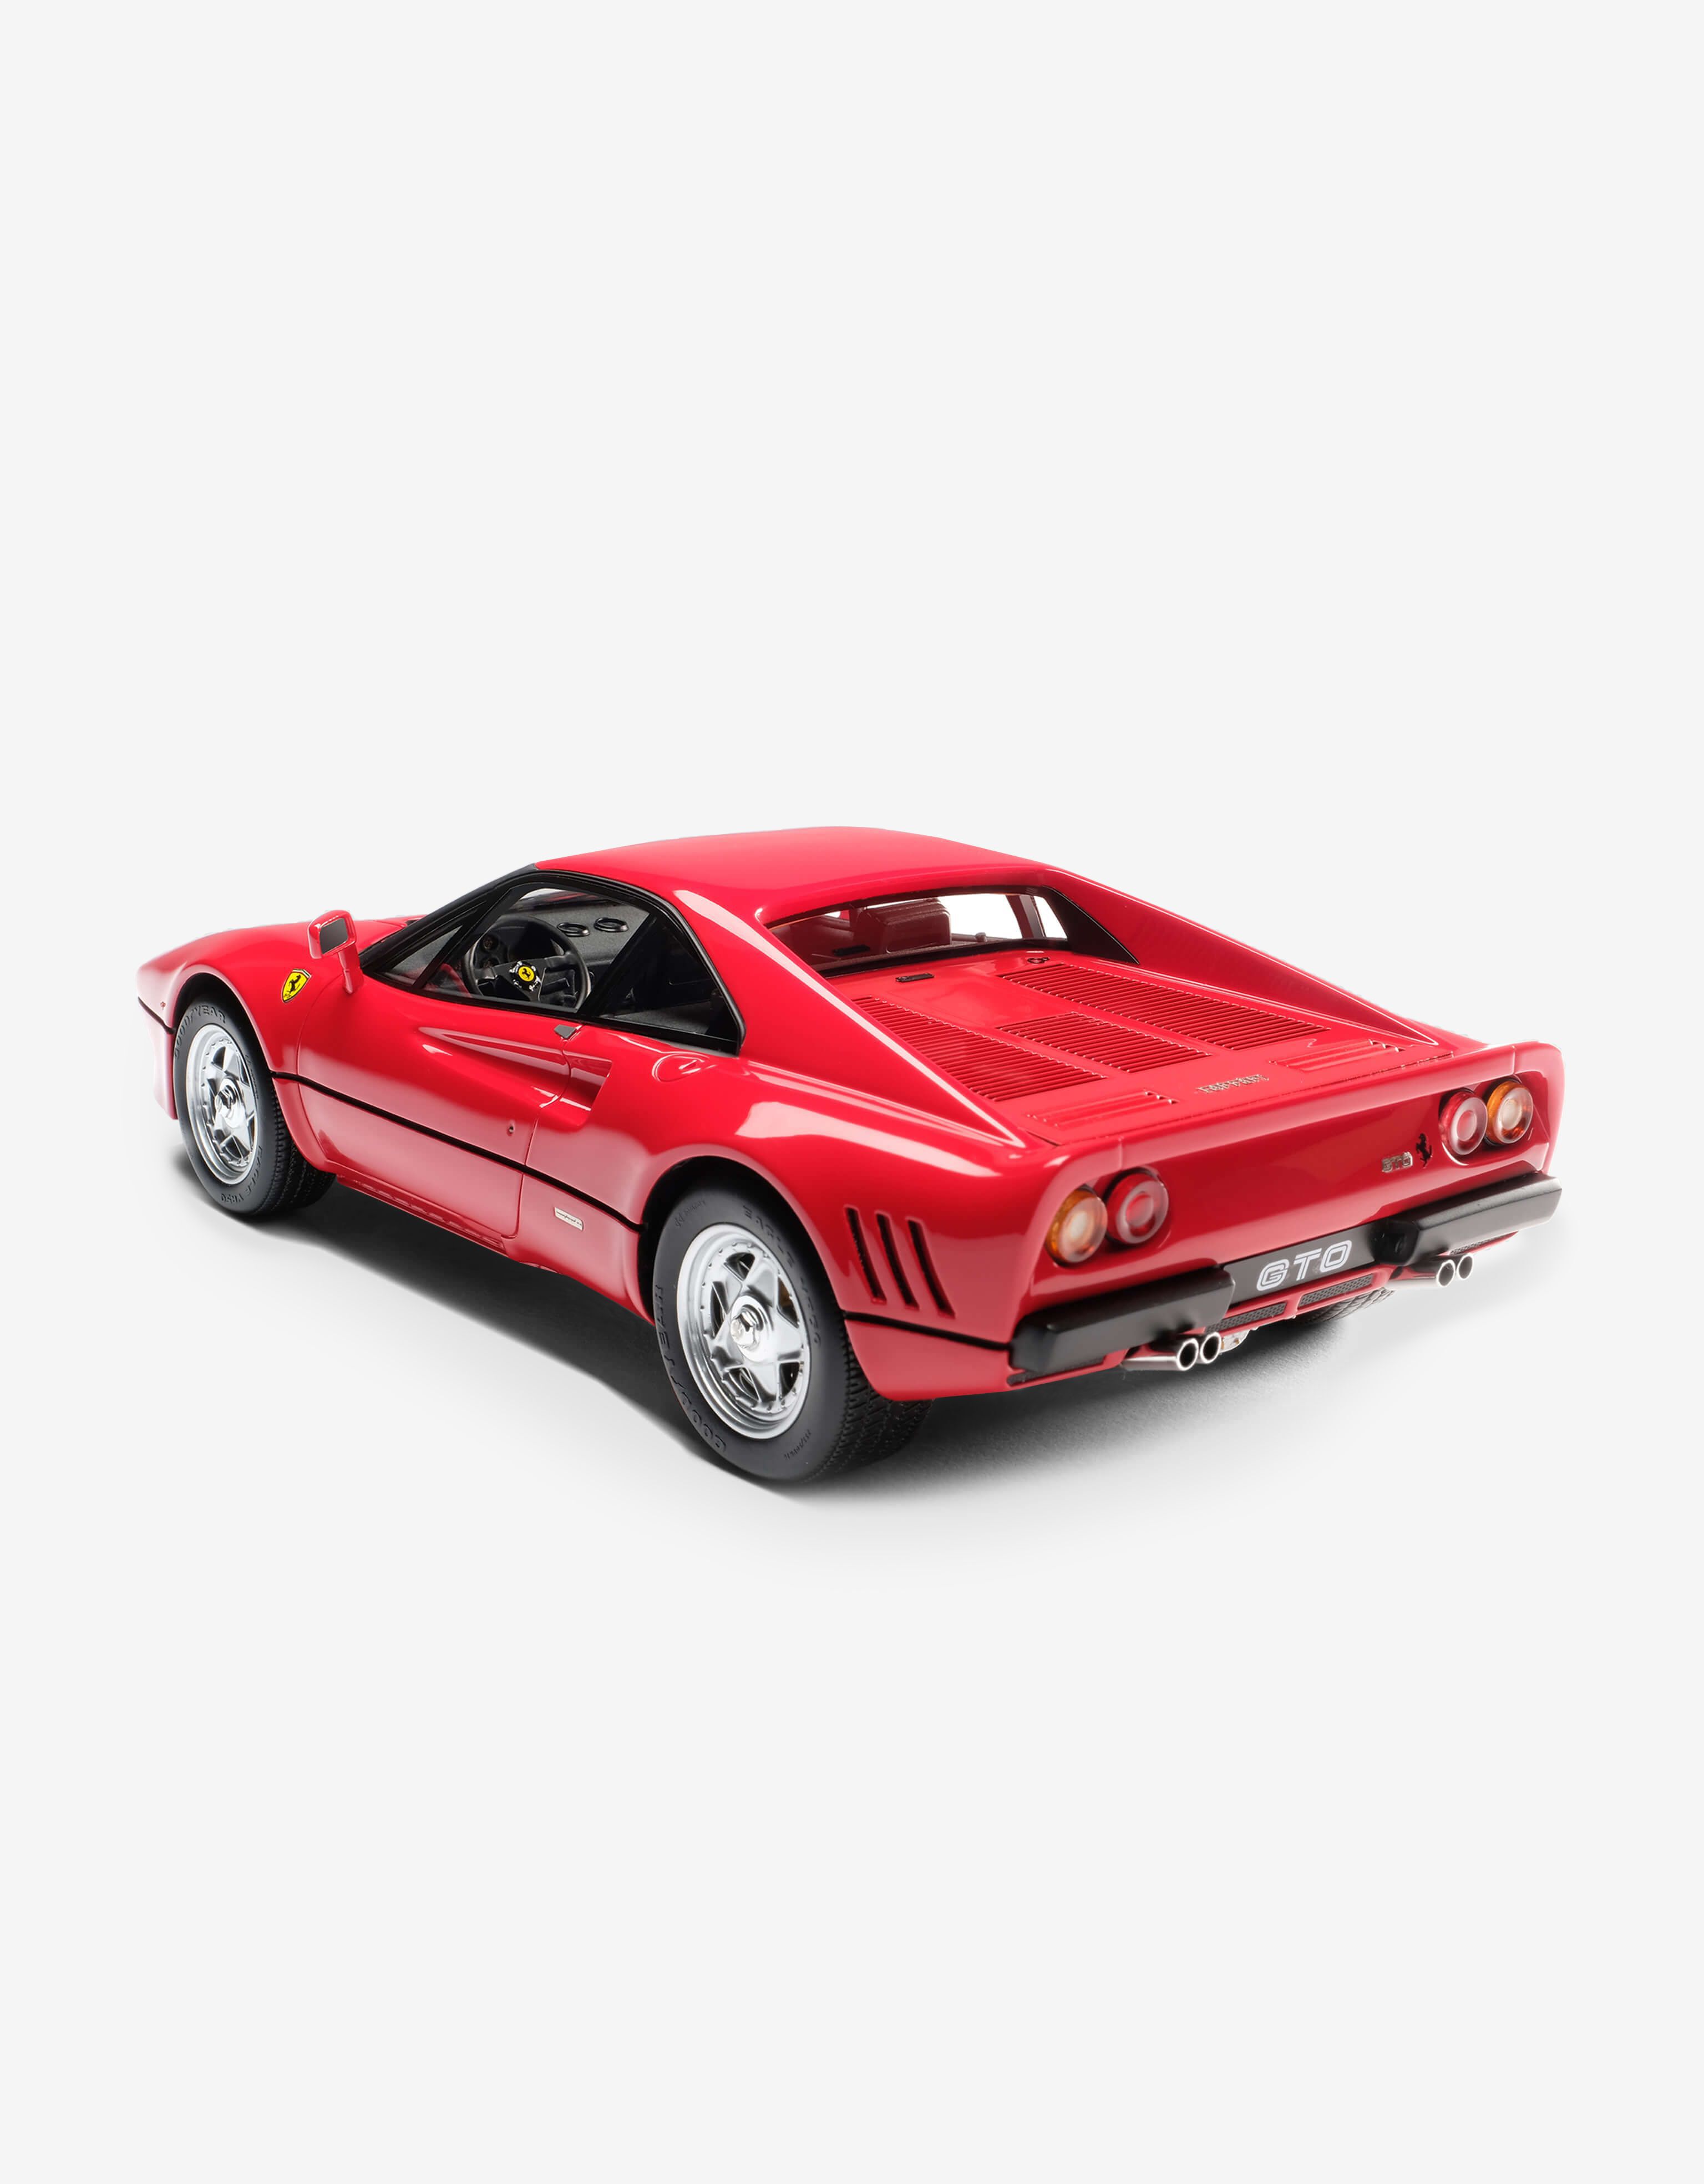 Ferrari 288 GTO Le Mans モデルカー 1:18スケール、レッドの | Ferrari®